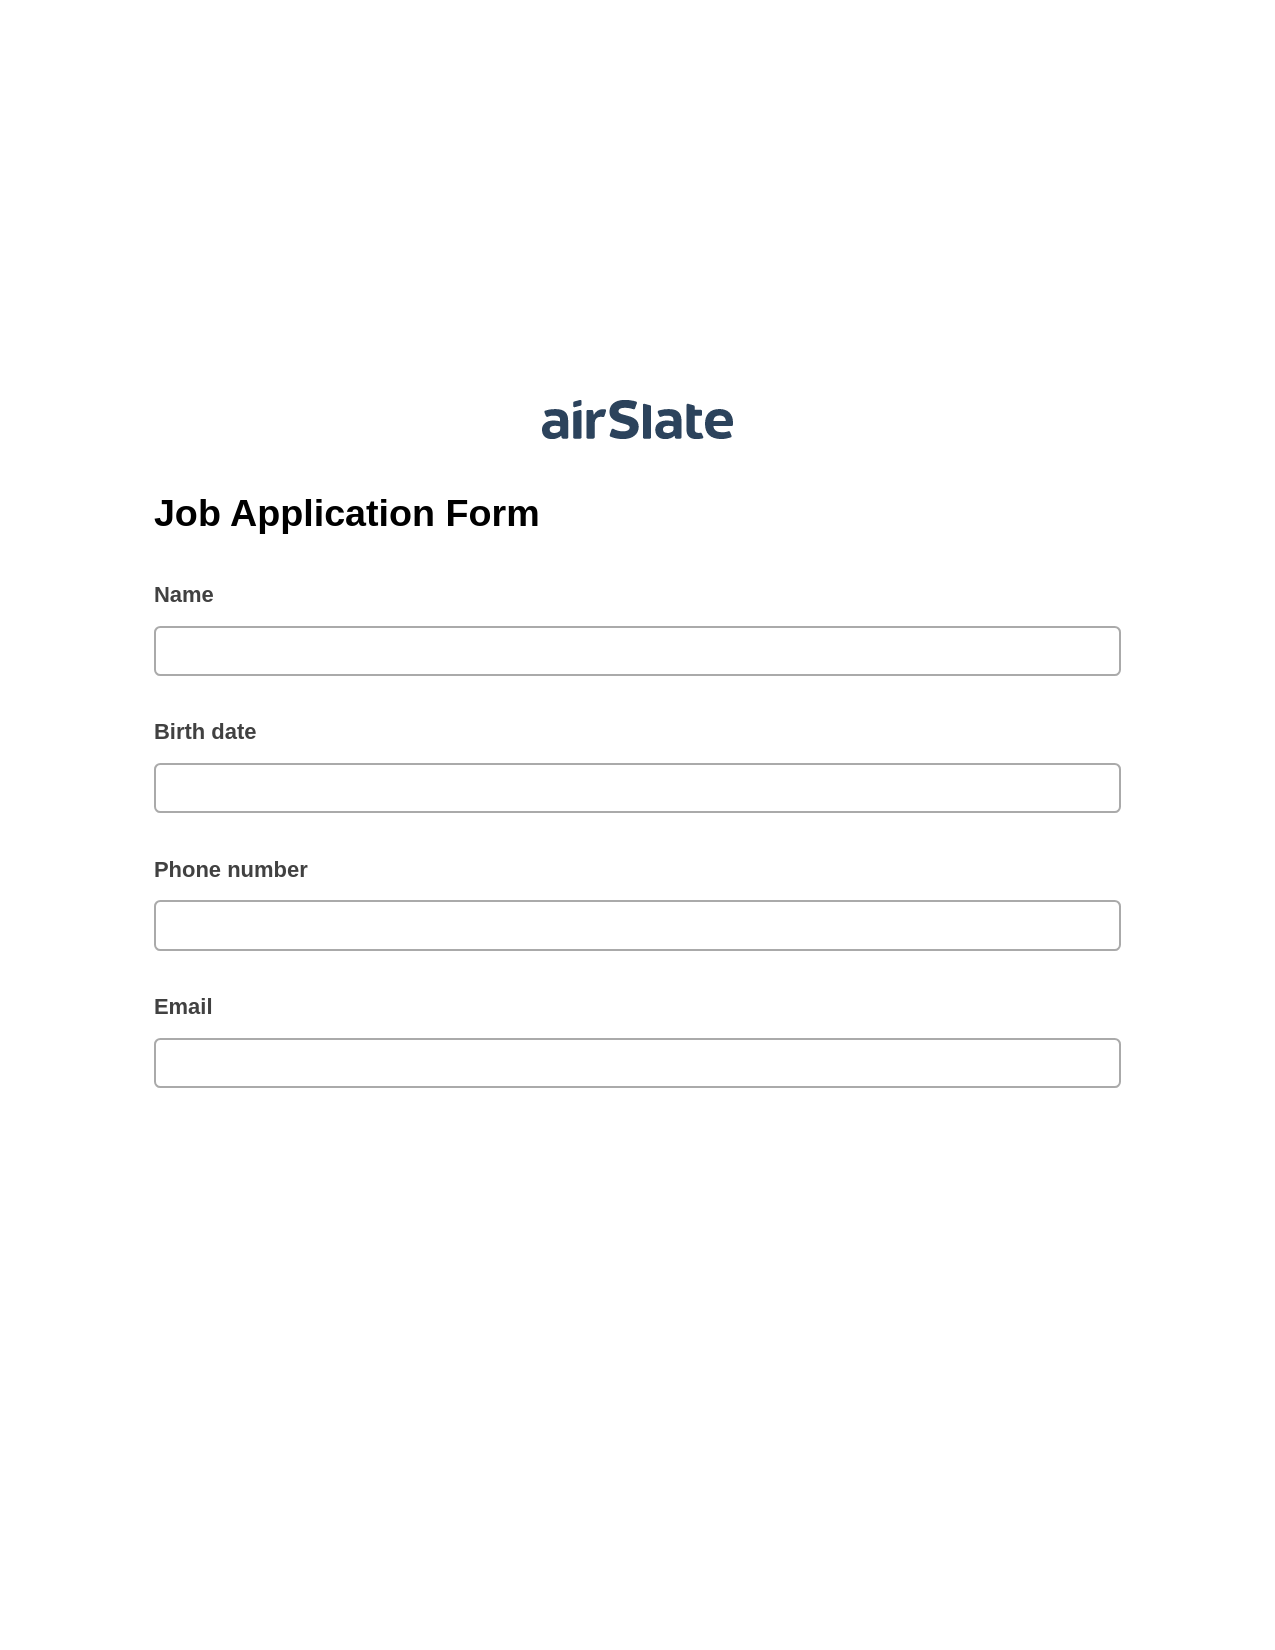 Multirole Job Application Form Pre-fill from NetSuite Records Bot, SendGrid send Campaign bot, OneDrive Bot